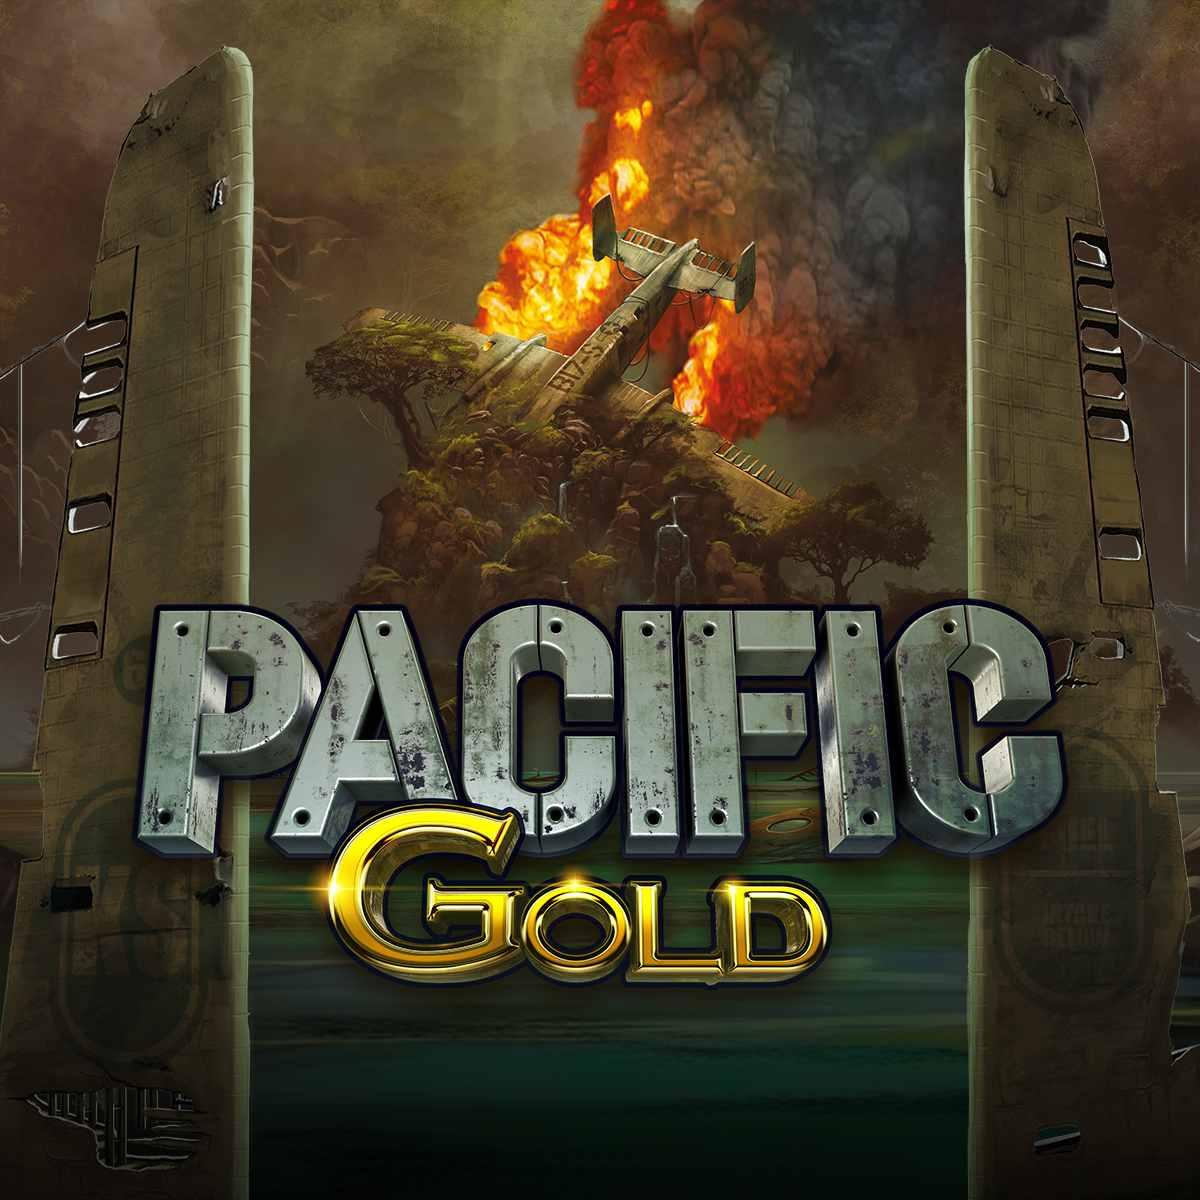 Slot Pacific Gold Akan Segera Dirilis